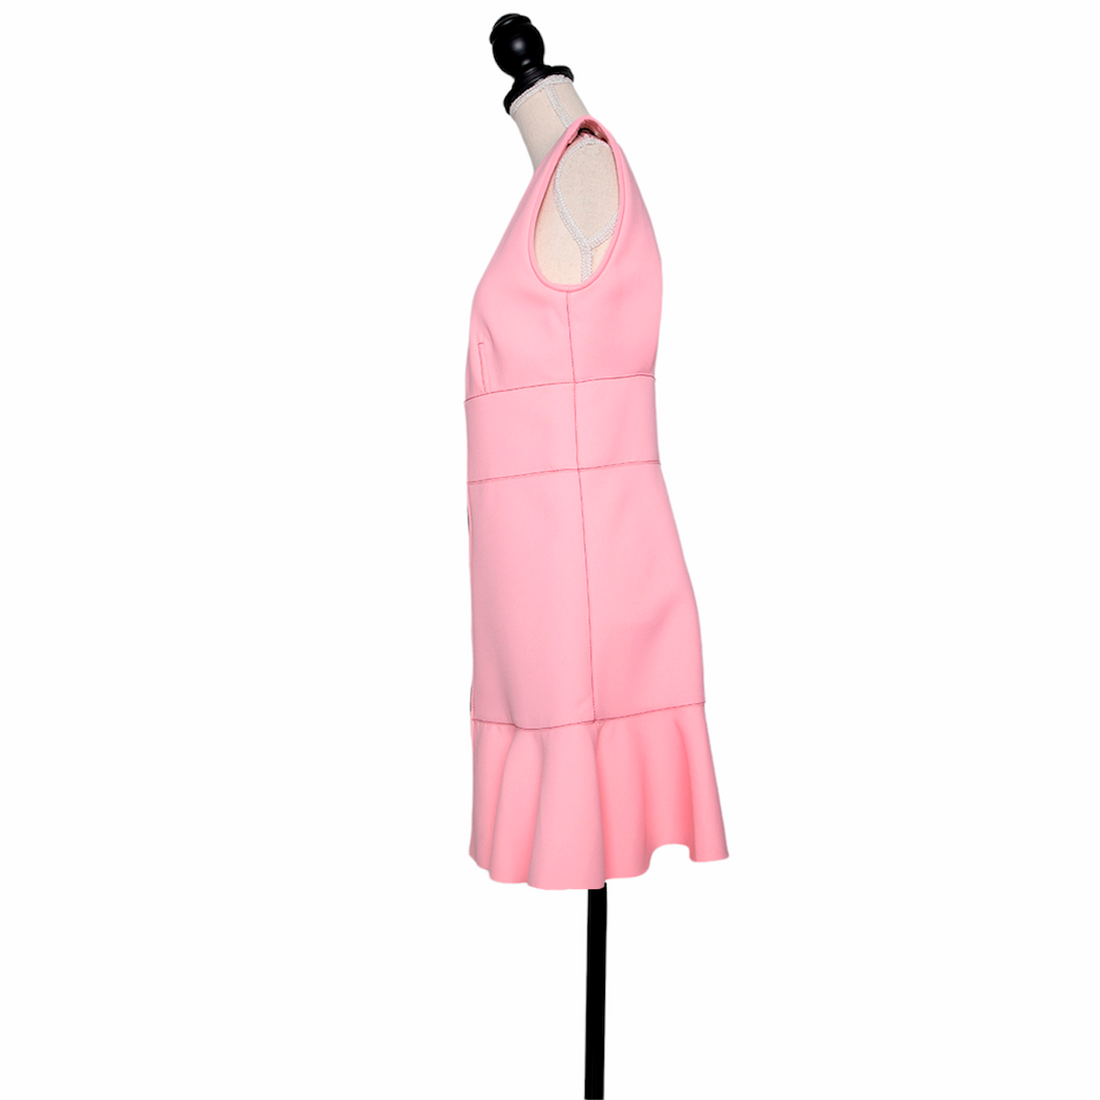 Louis Vuitton neoprene style mini dress with zipper and flounces